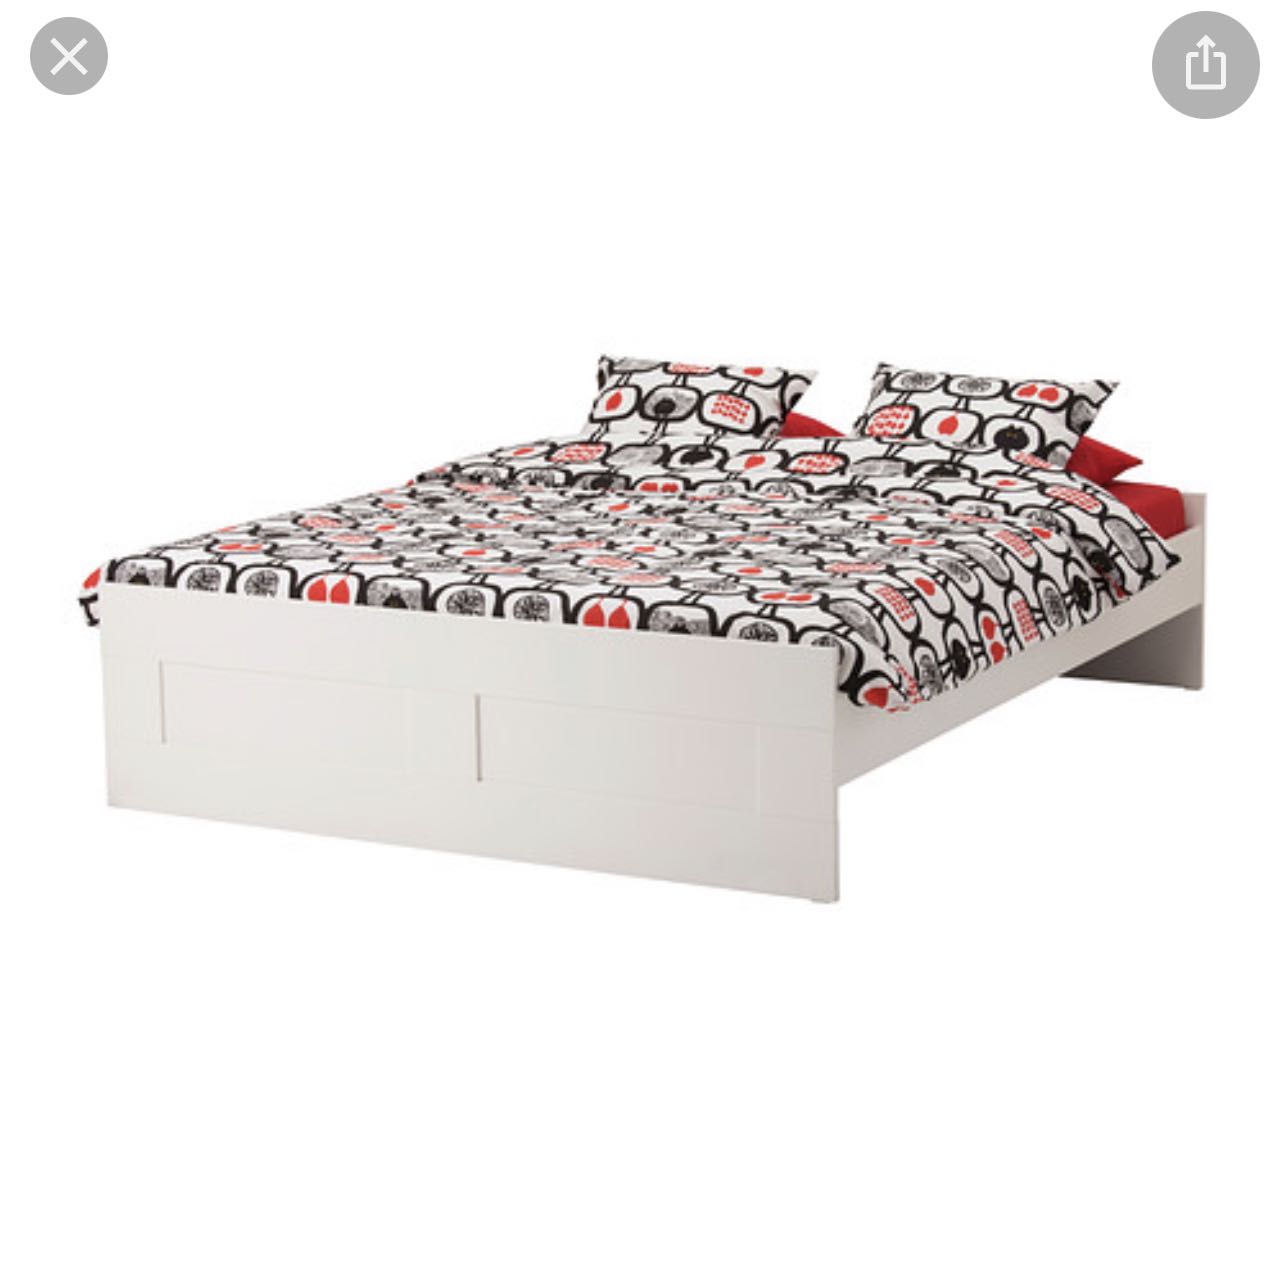 Ikea Brimnes Bed Frame Without Storage, Brimnes Bed Frame With Storage Headboard Black Queen